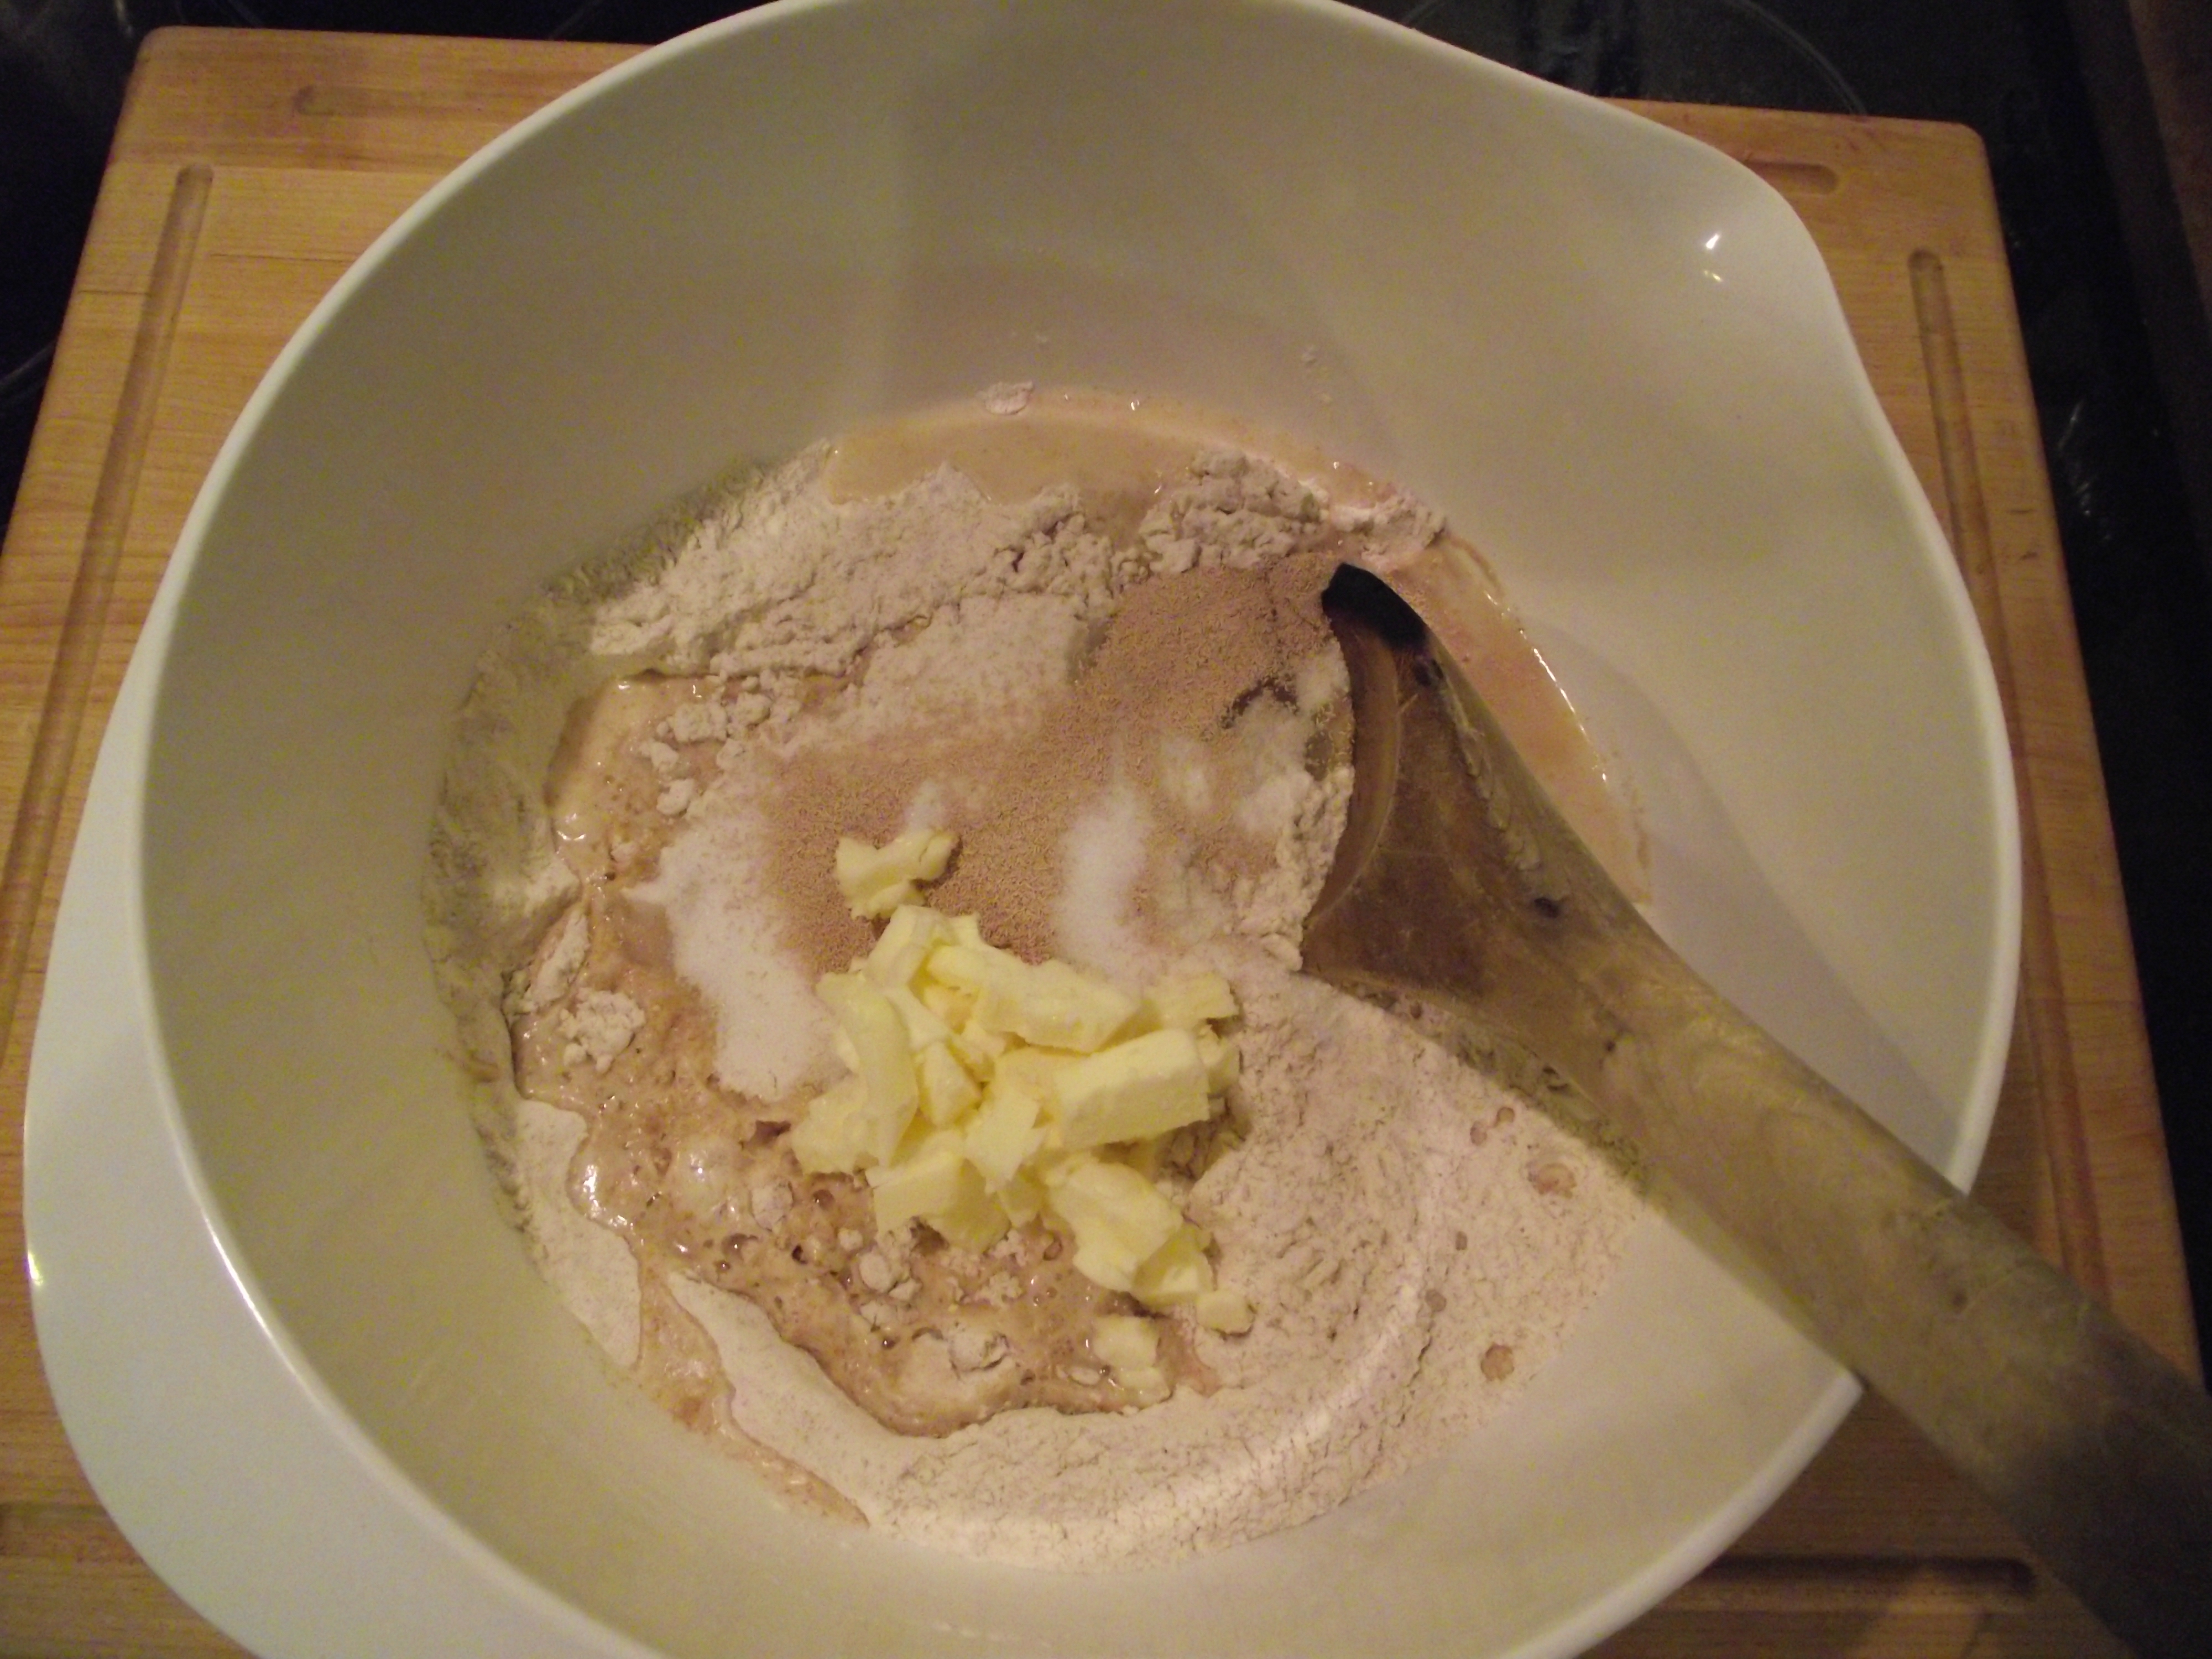 https://bakethiscake.files.wordpress.com/2011/10/stirring-bread-ingredients-with-a-wooden-spoon.jpg